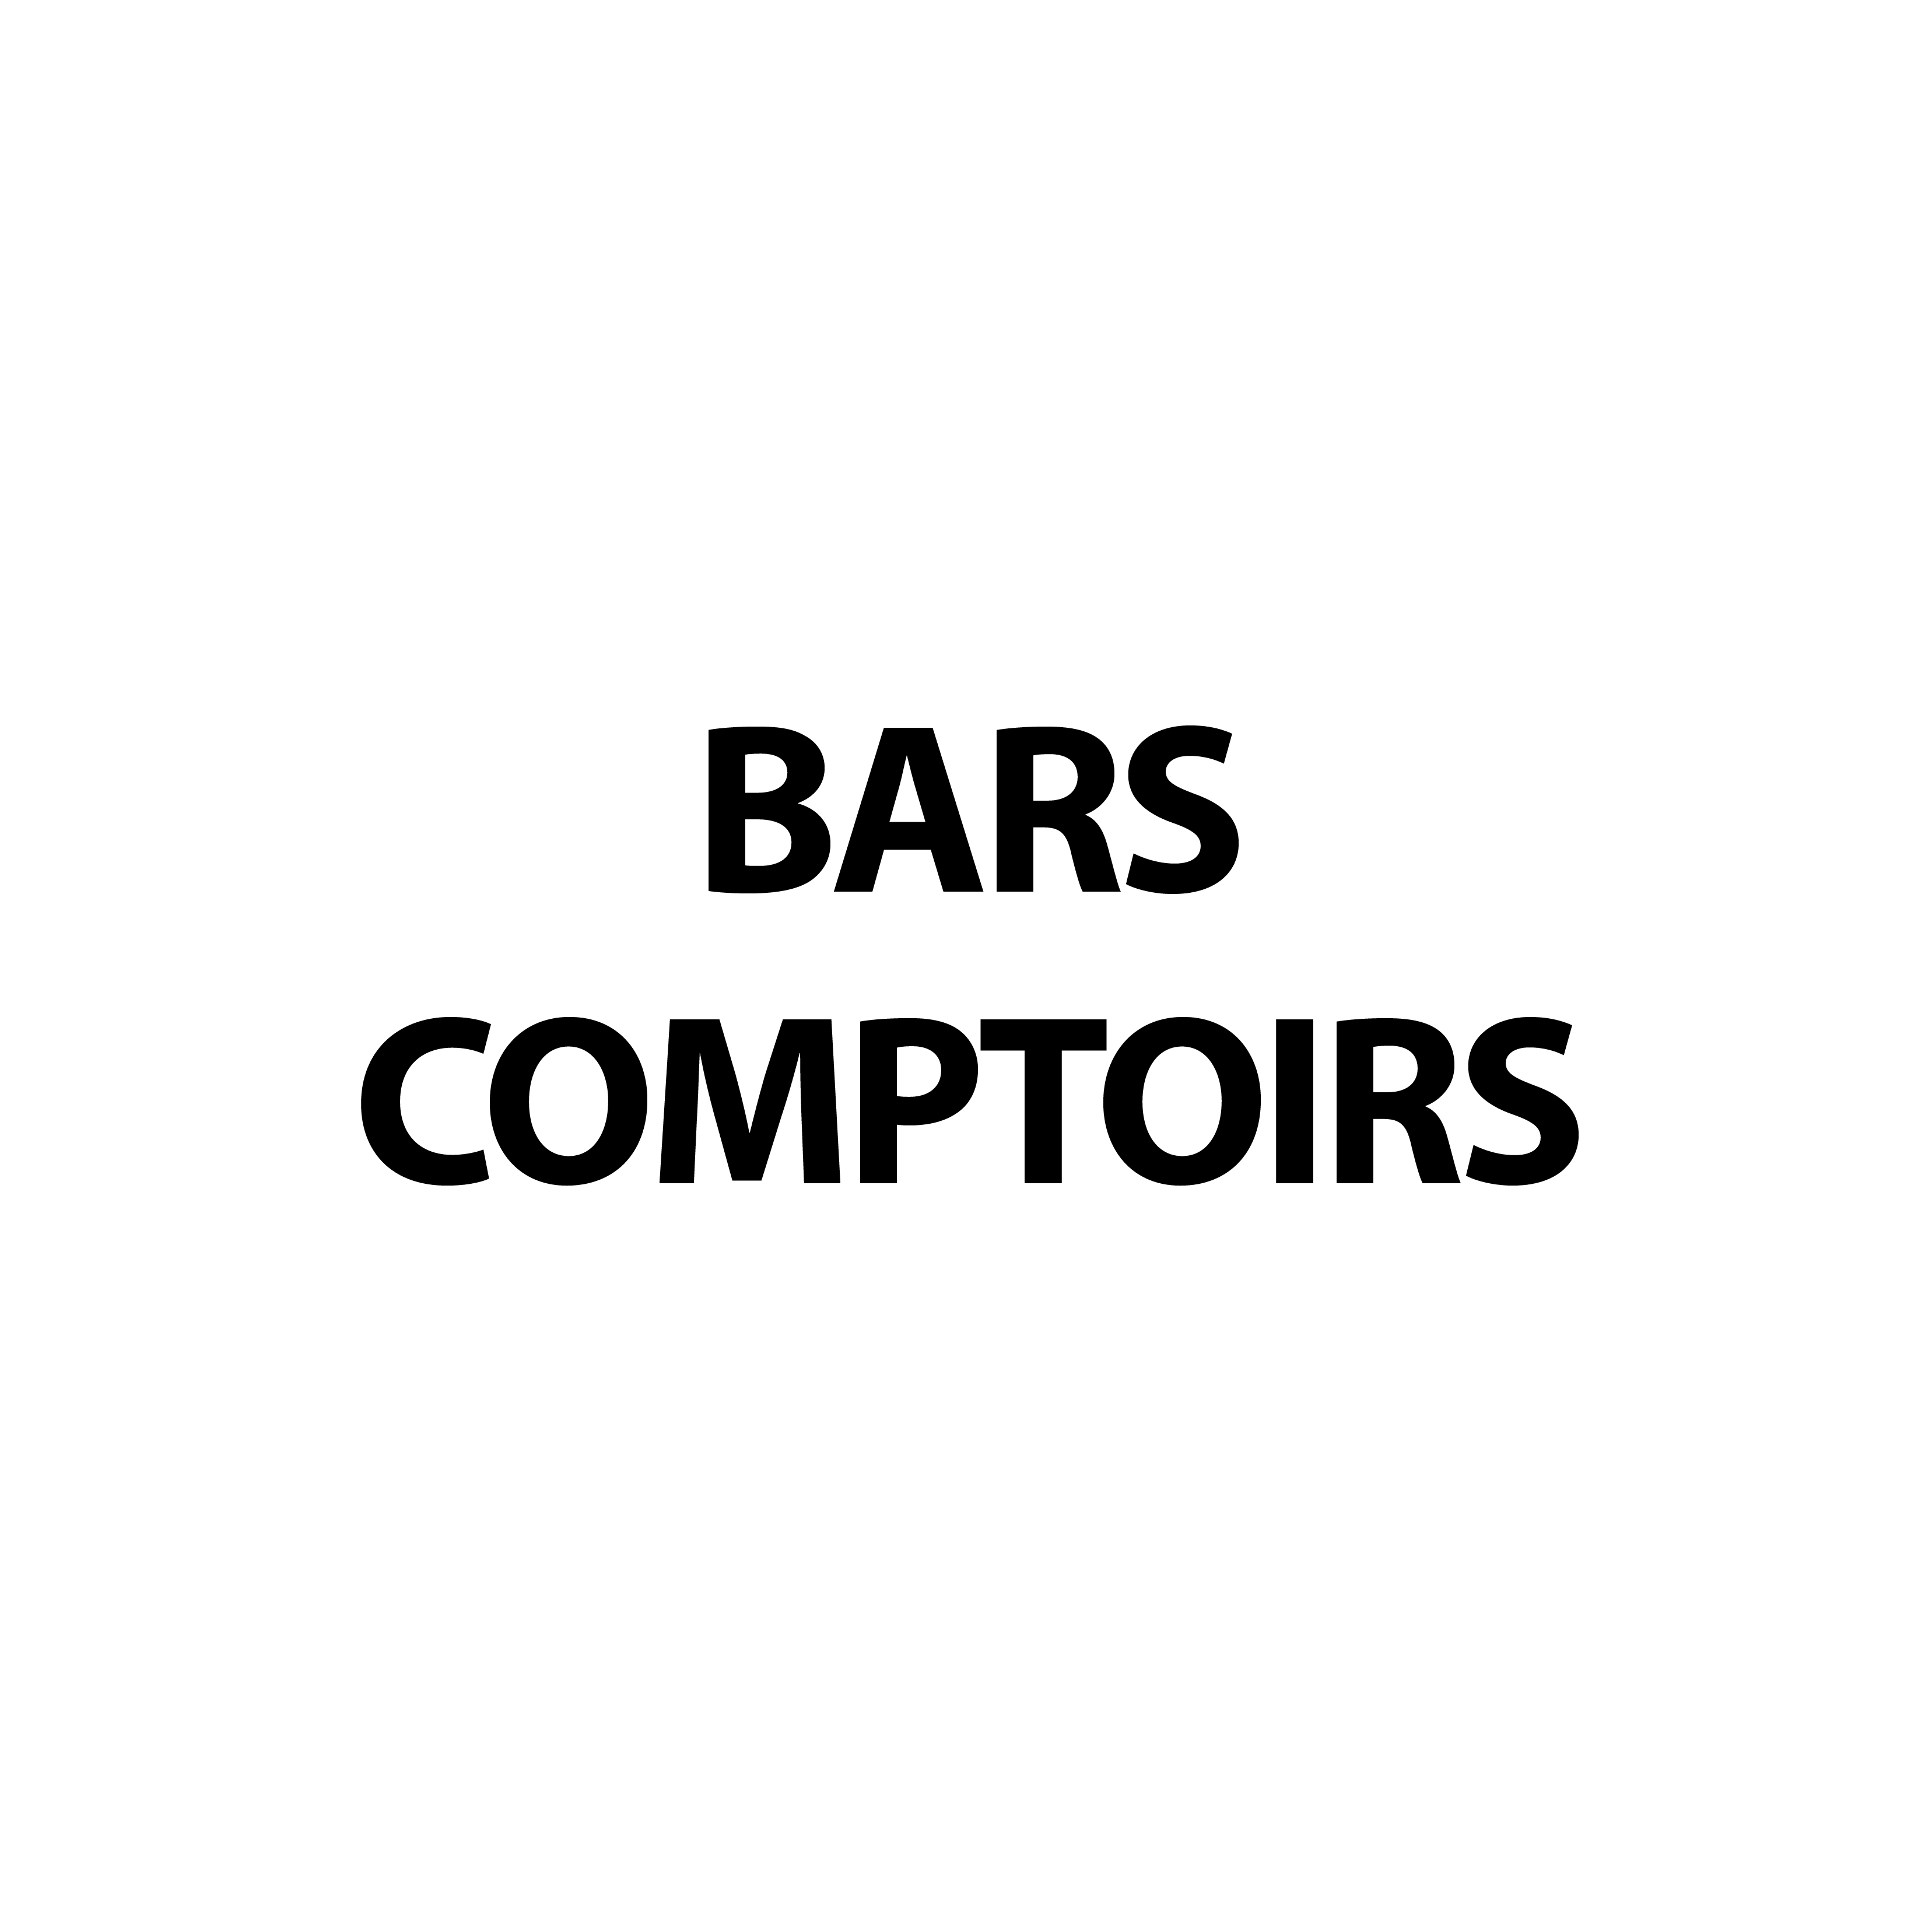 Bars - Comptoirs